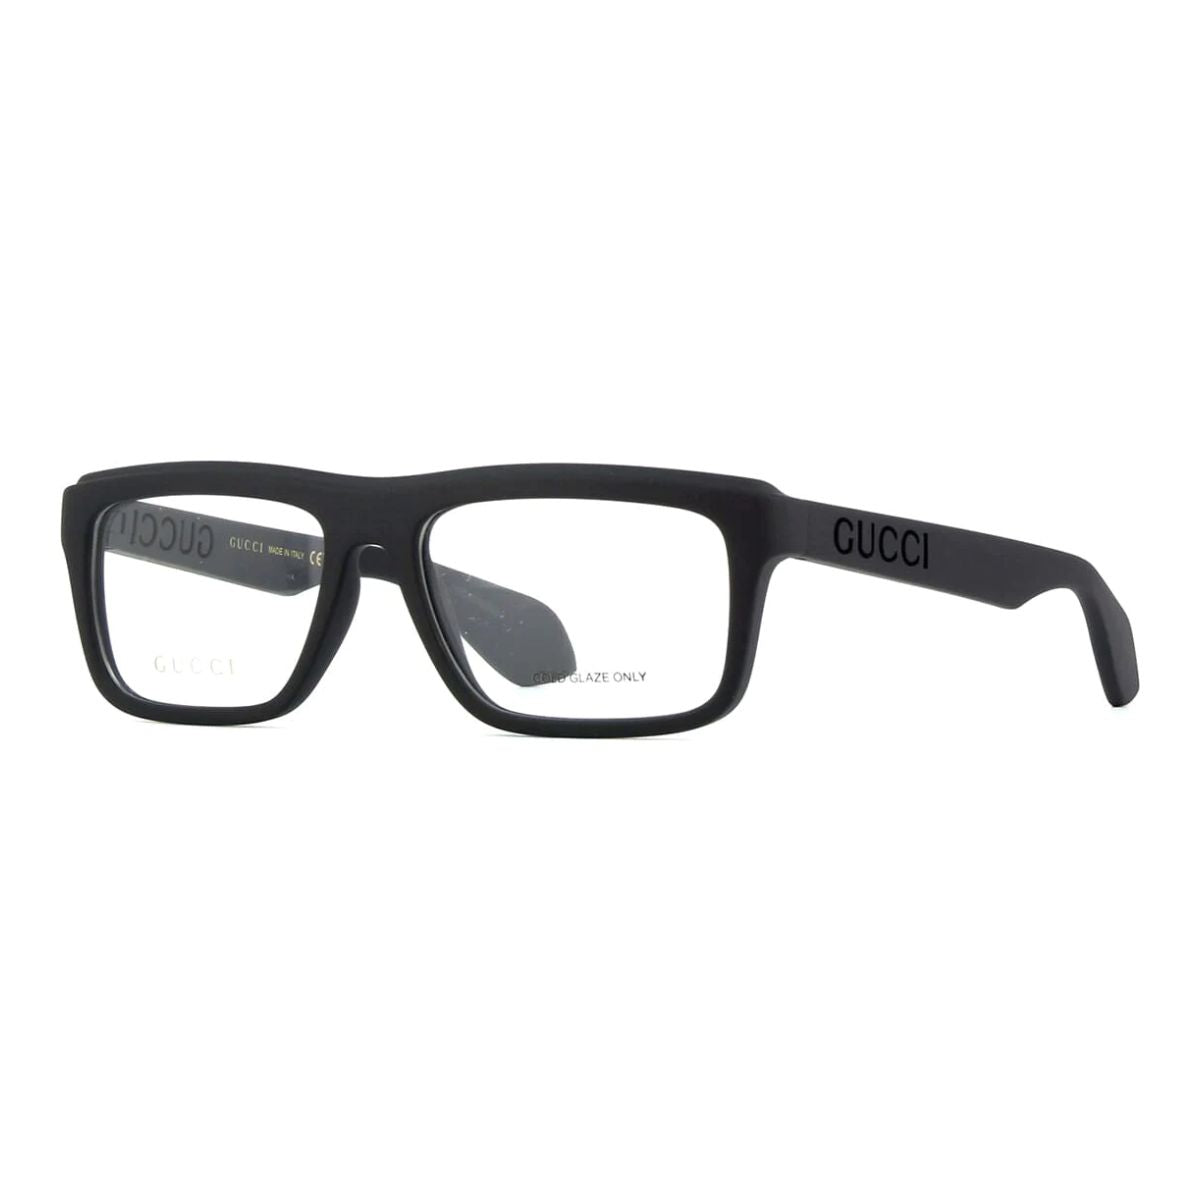 "Crafted Gucci Eyeglasses - Model 1572O 001 frames designed for fashion-forward individuals seeking sophistication."